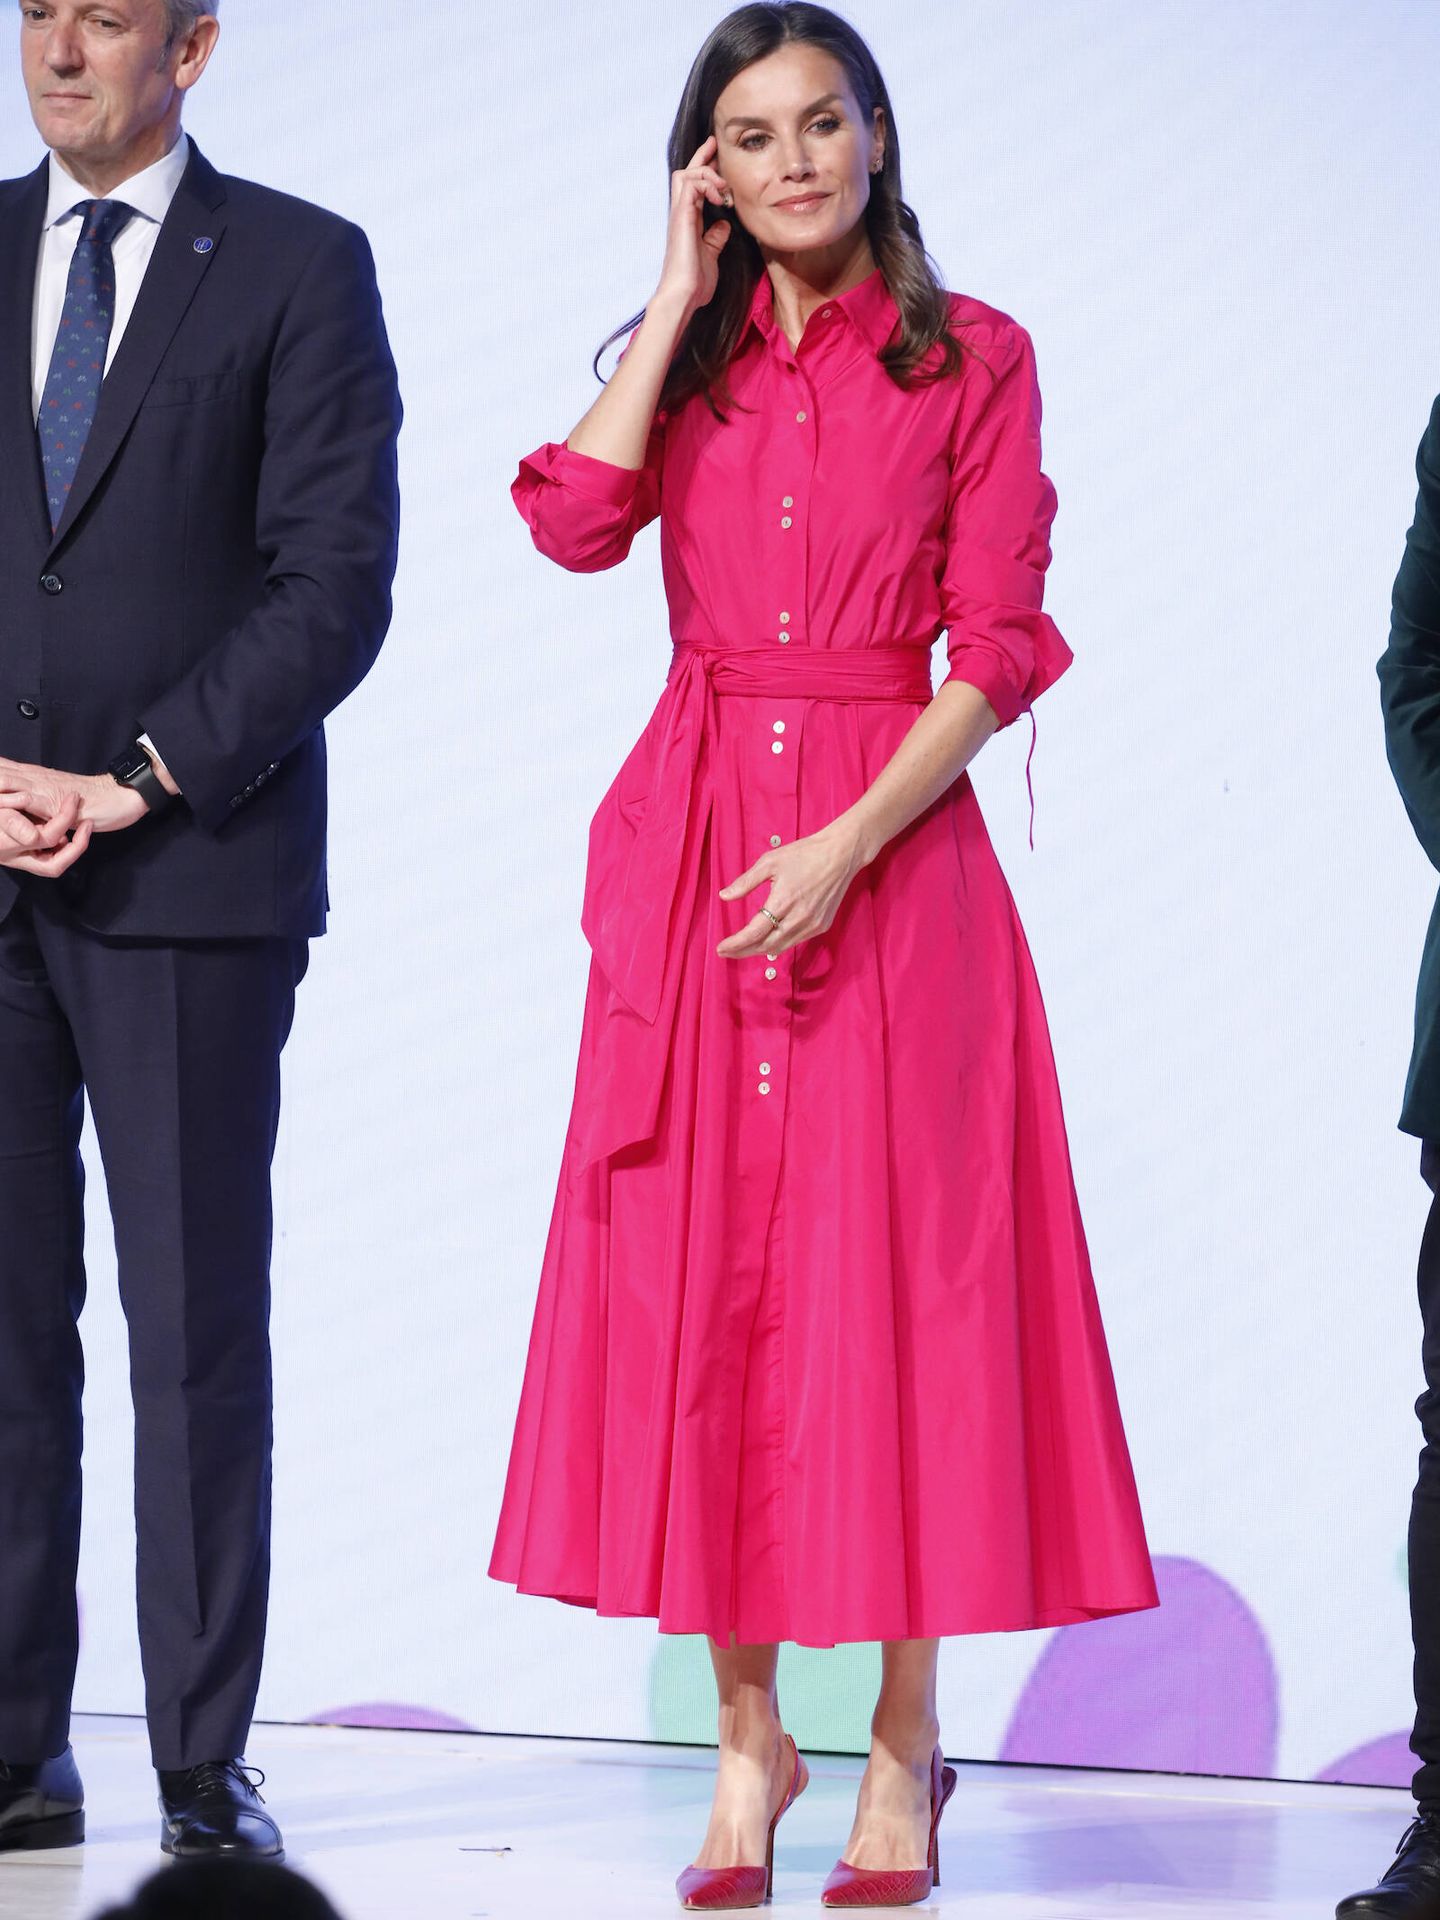  La reina Letizia, con vestido fucsia de Roberto Verino. (LP)